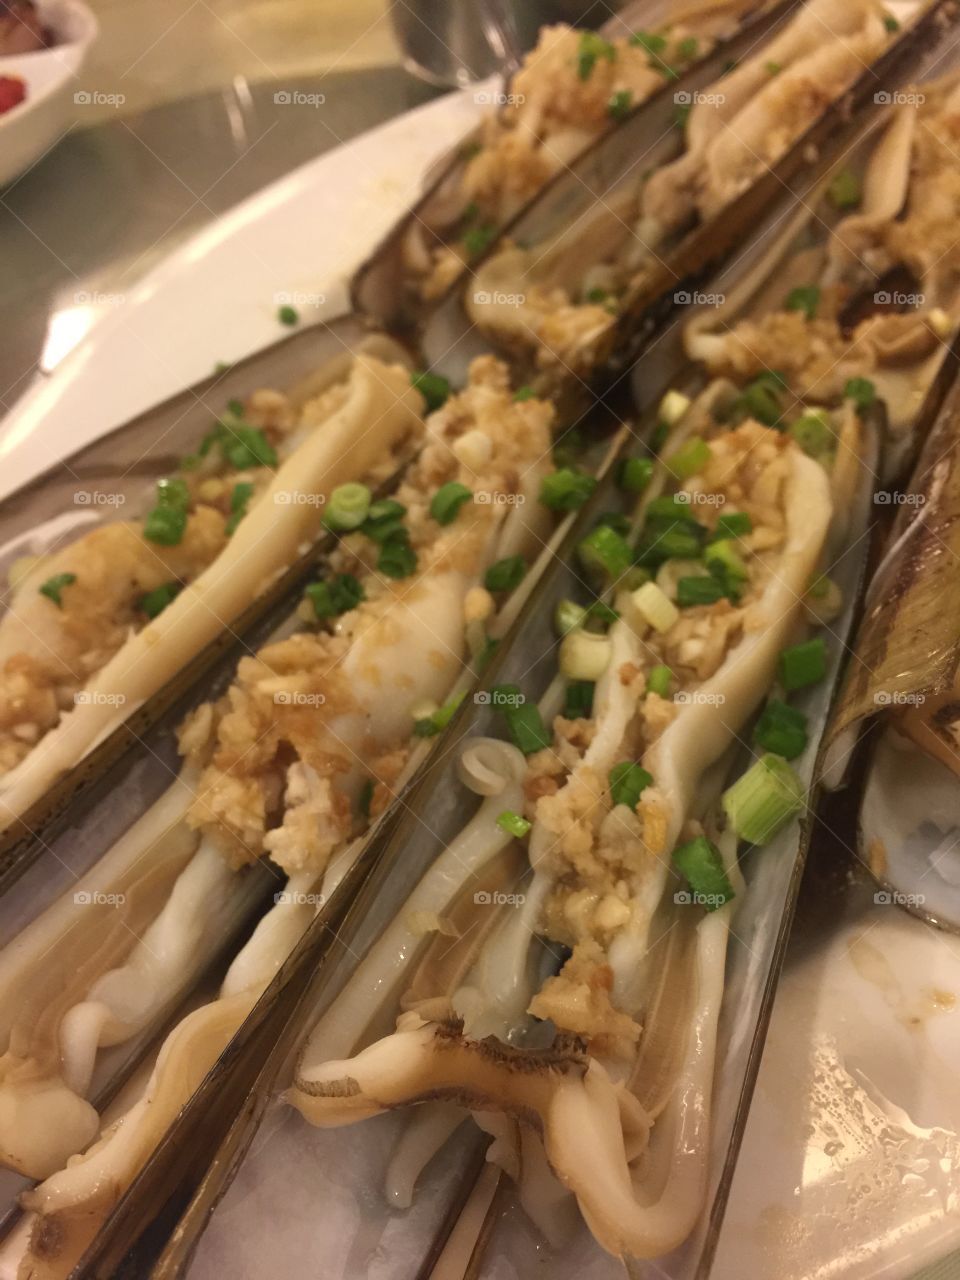 Bamboo clams